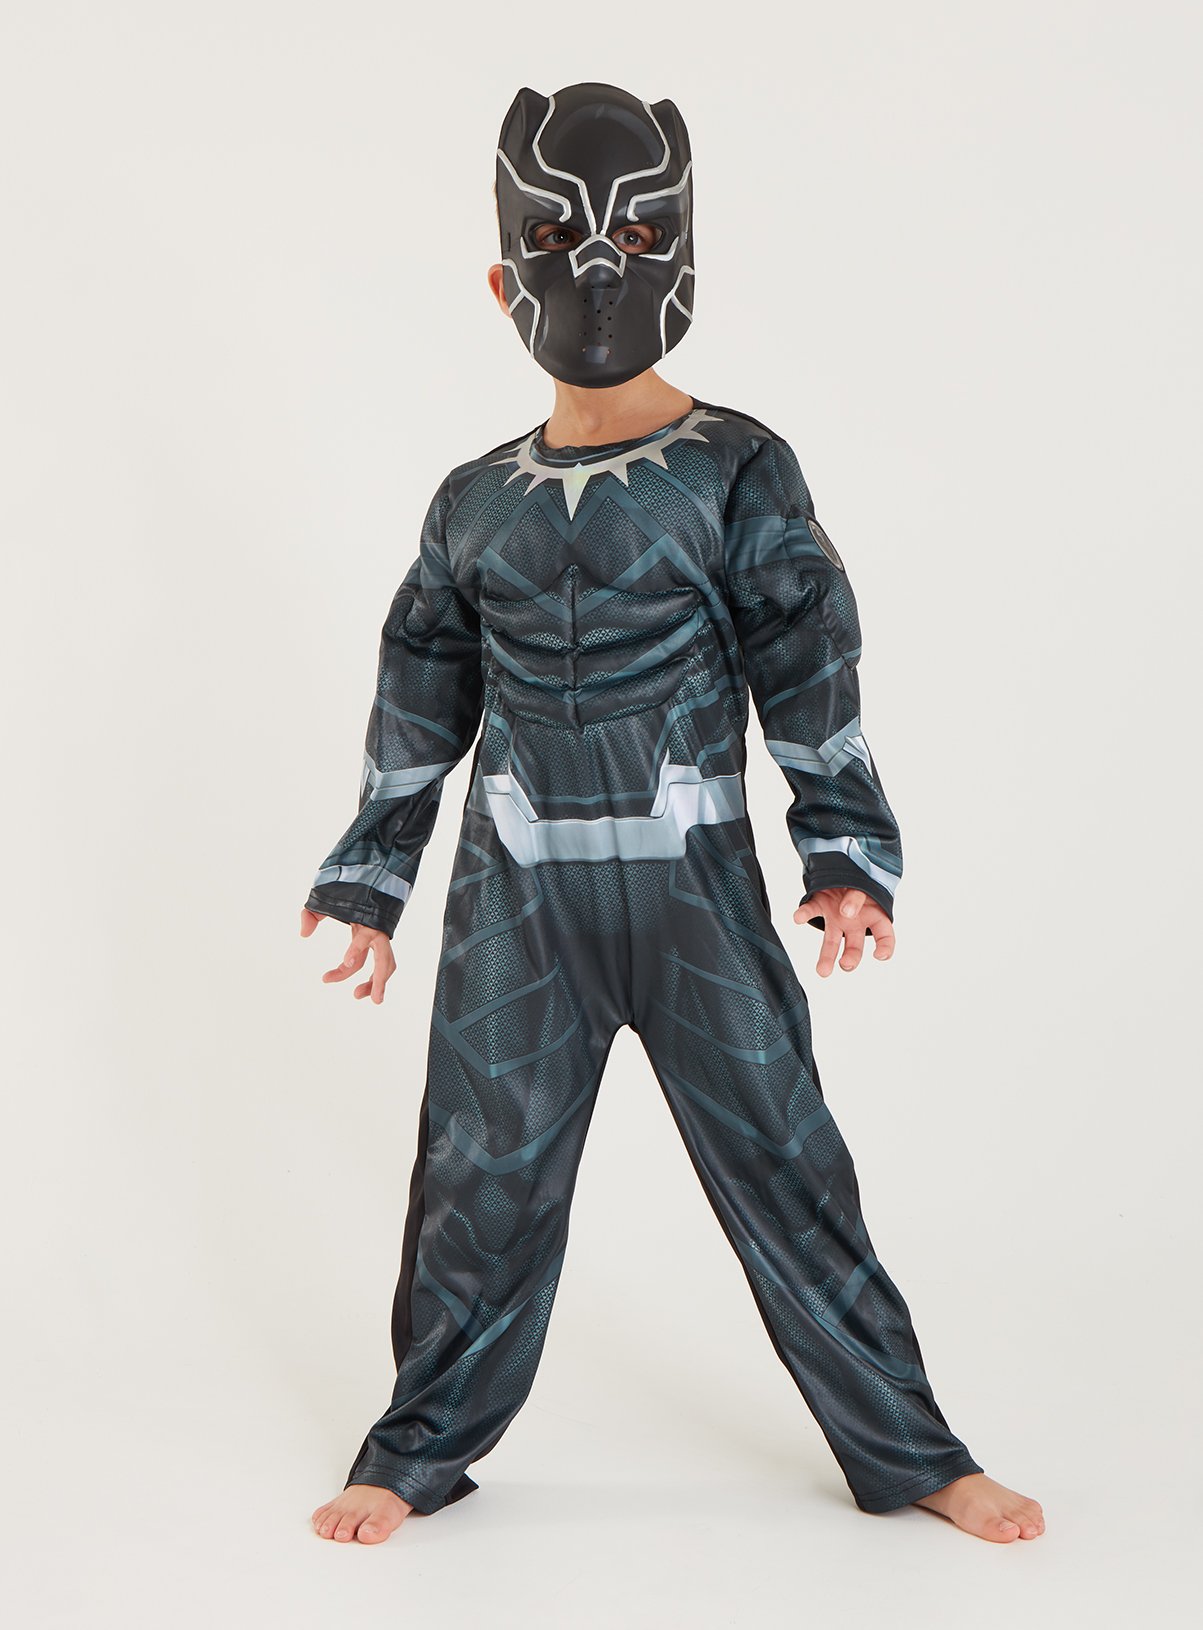 Disney Marvel Black Panther Costume & Mask Review